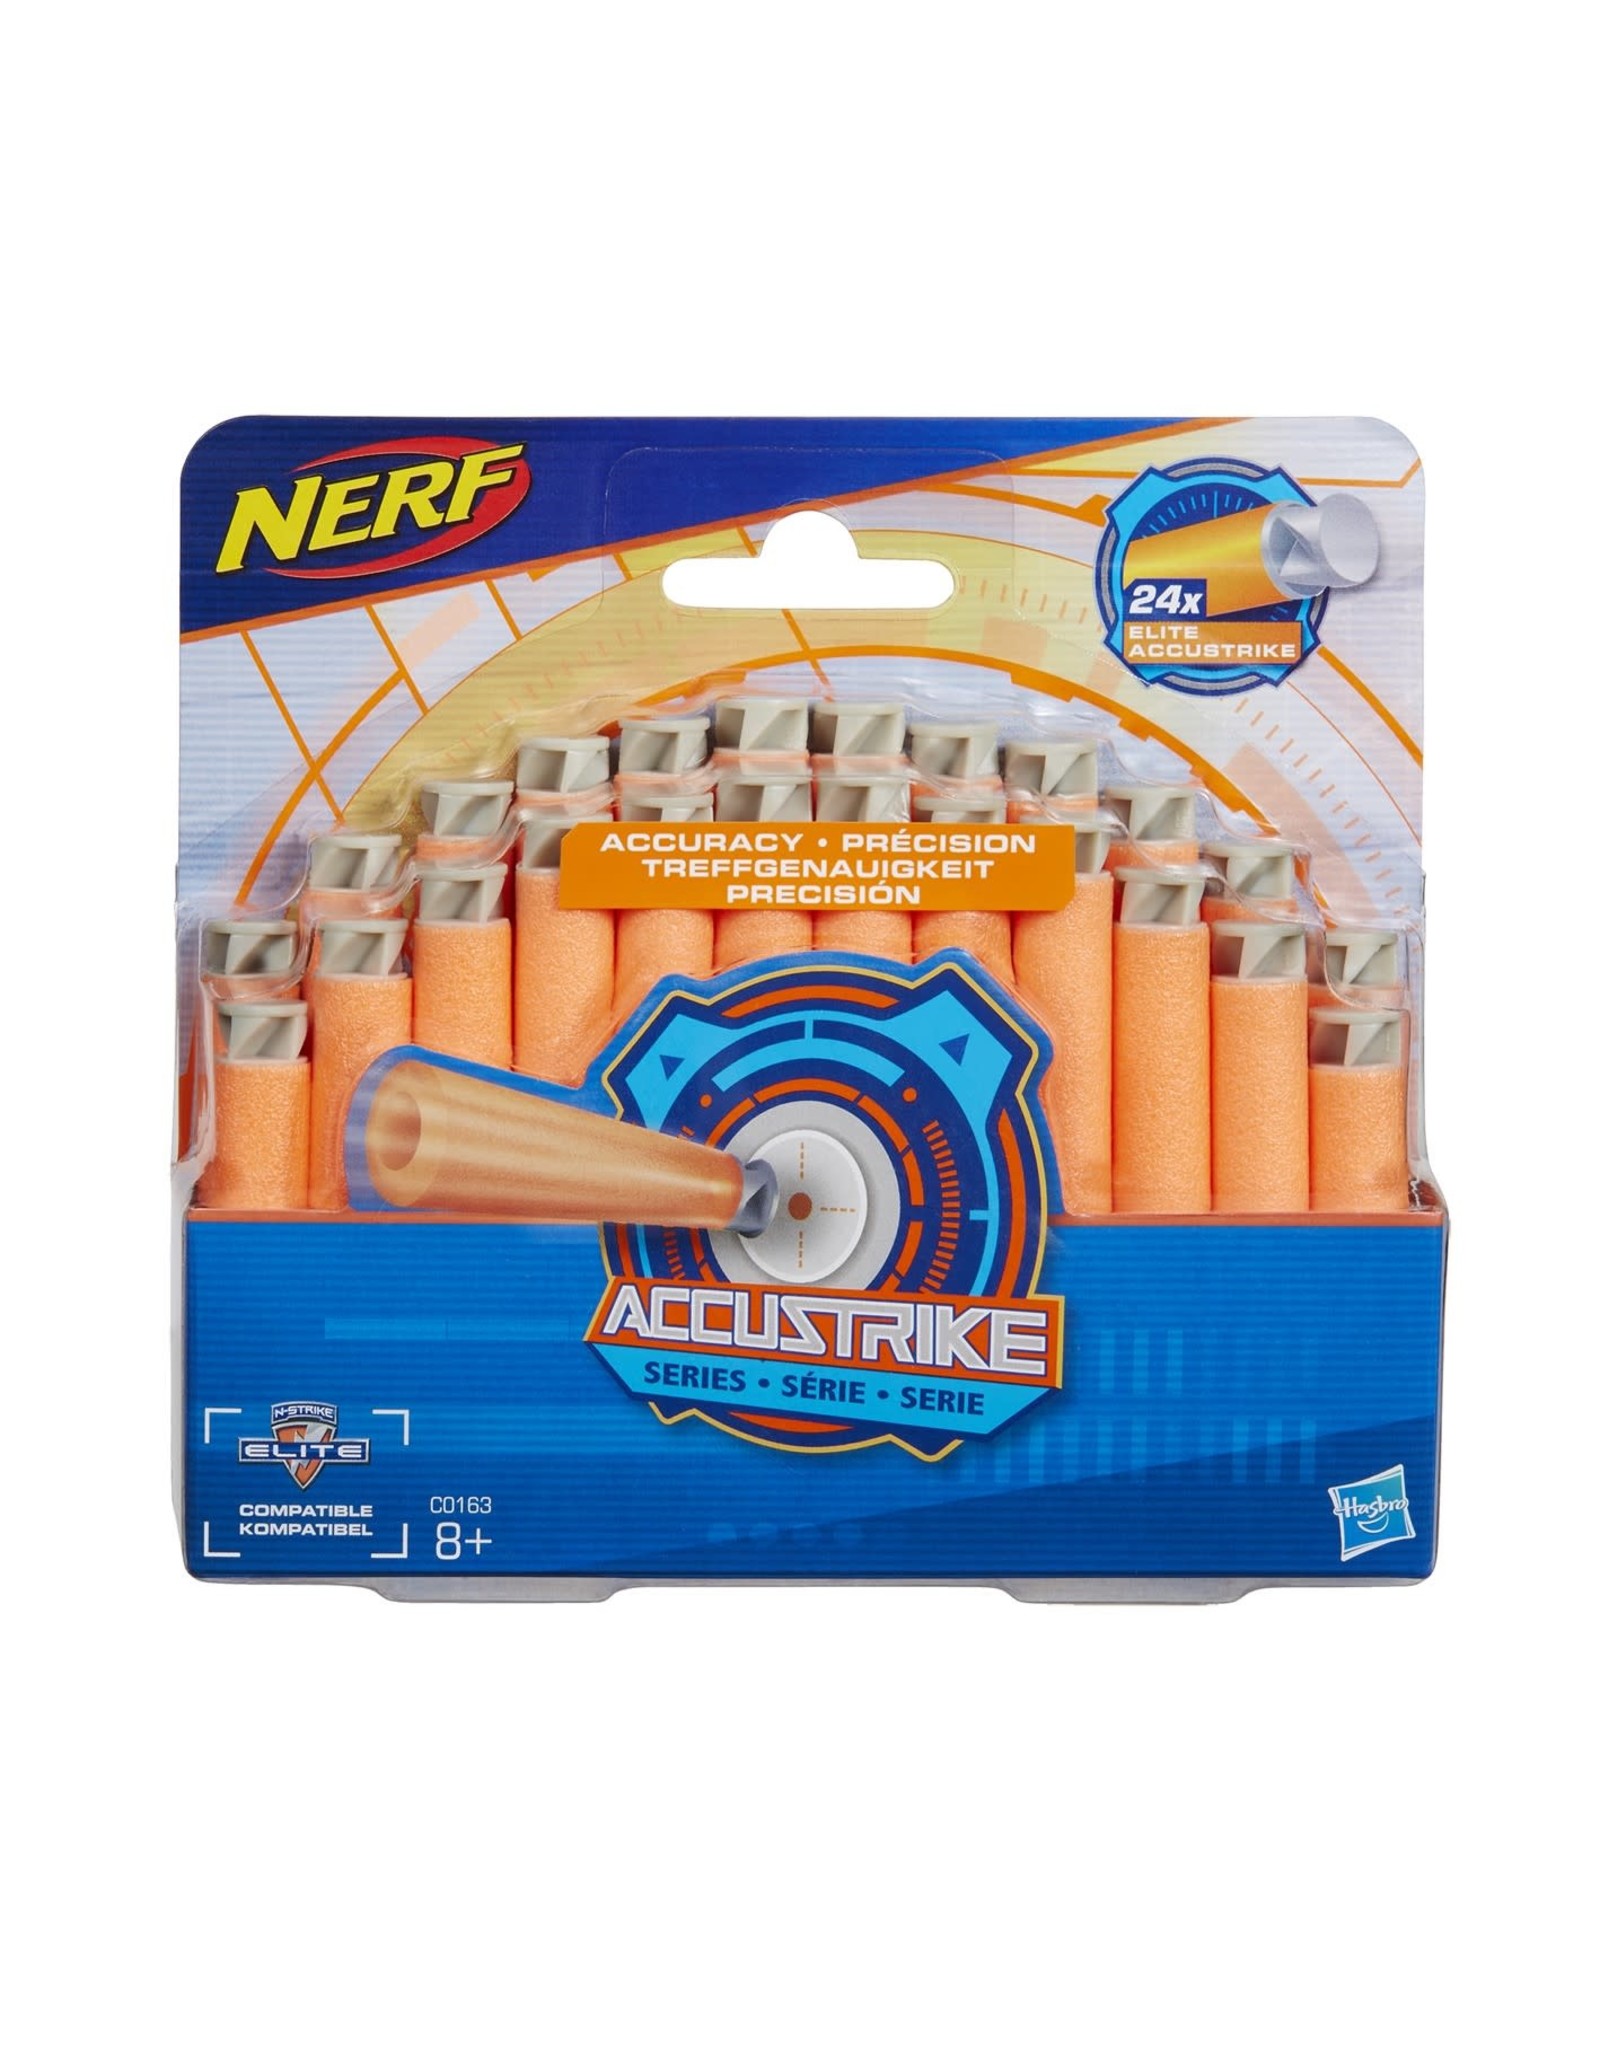 Nerf Nerf Accu Strike Refill 24St